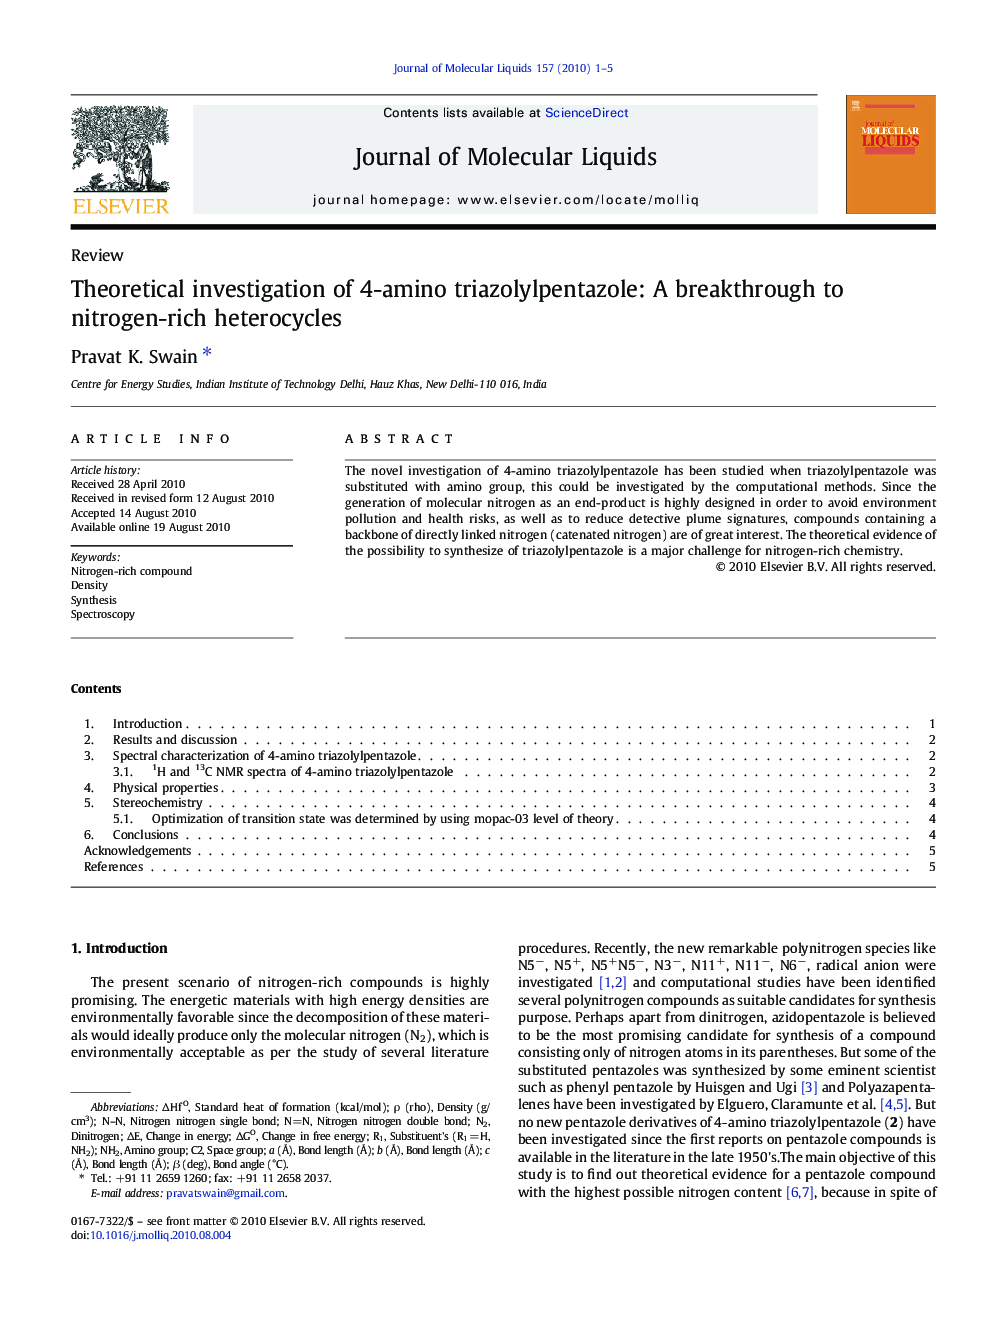 Theoretical investigation of 4-amino triazolylpentazole: A breakthrough to nitrogen-rich heterocycles